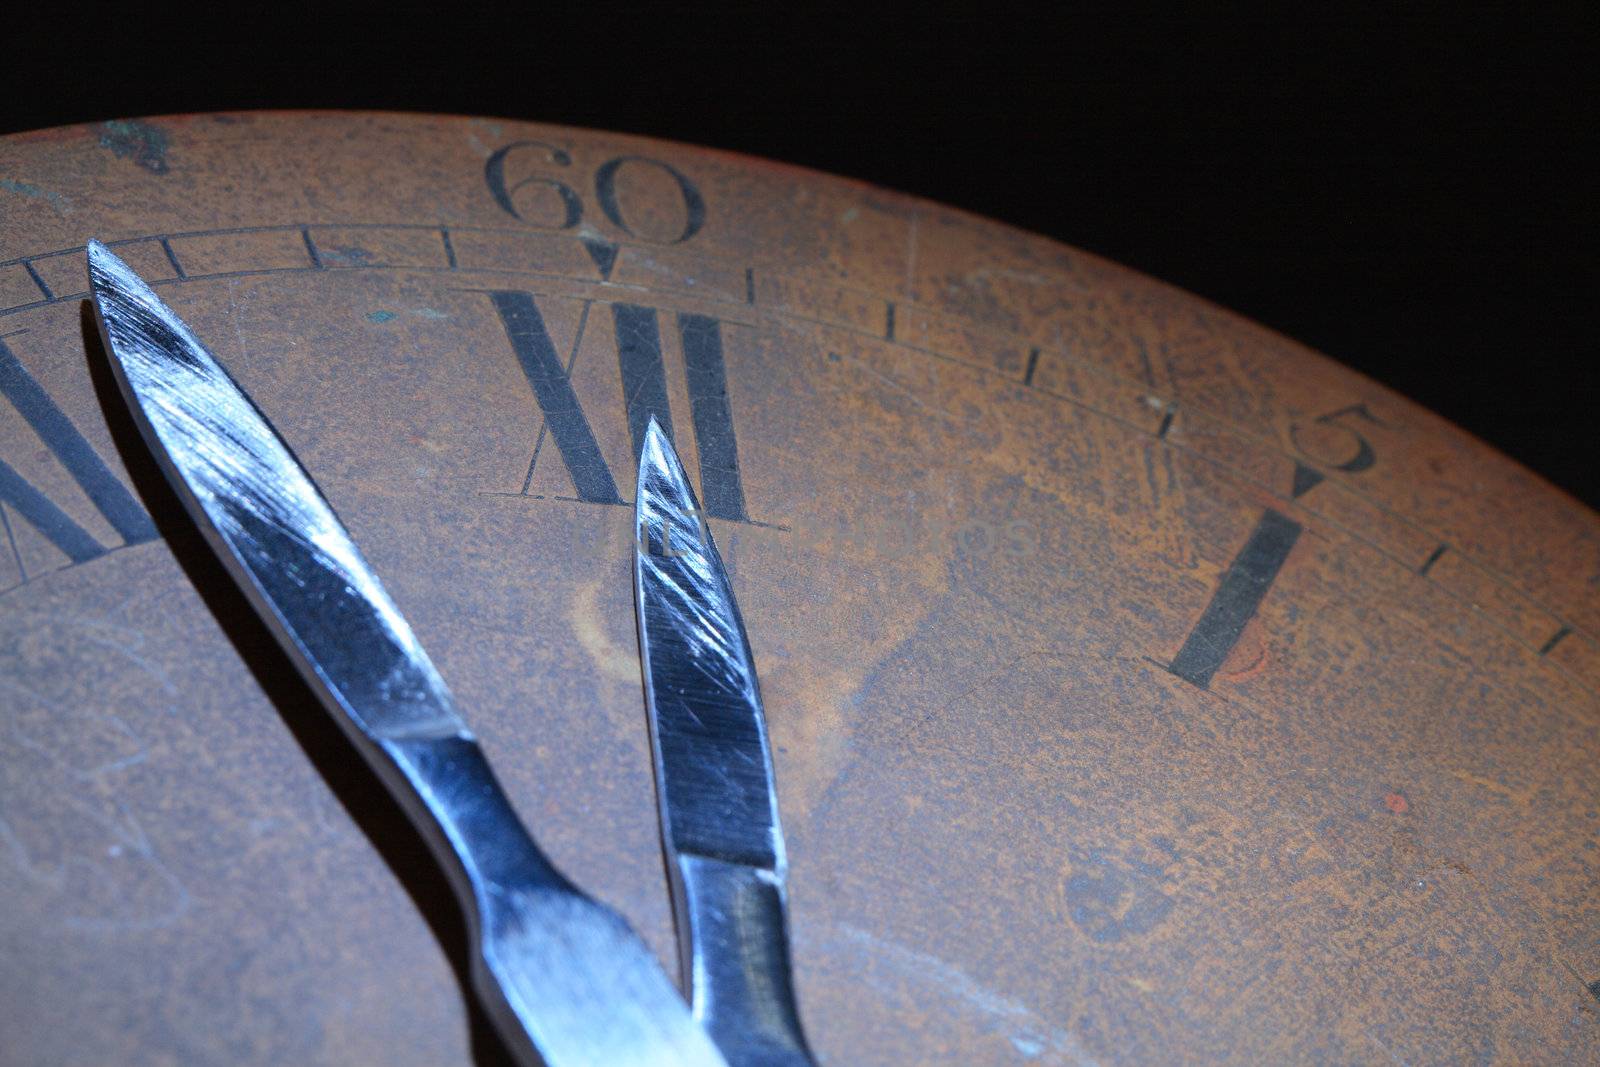 Closeup of old rusty bronze clock dial. Clock hands made from sharpen steel scalpels